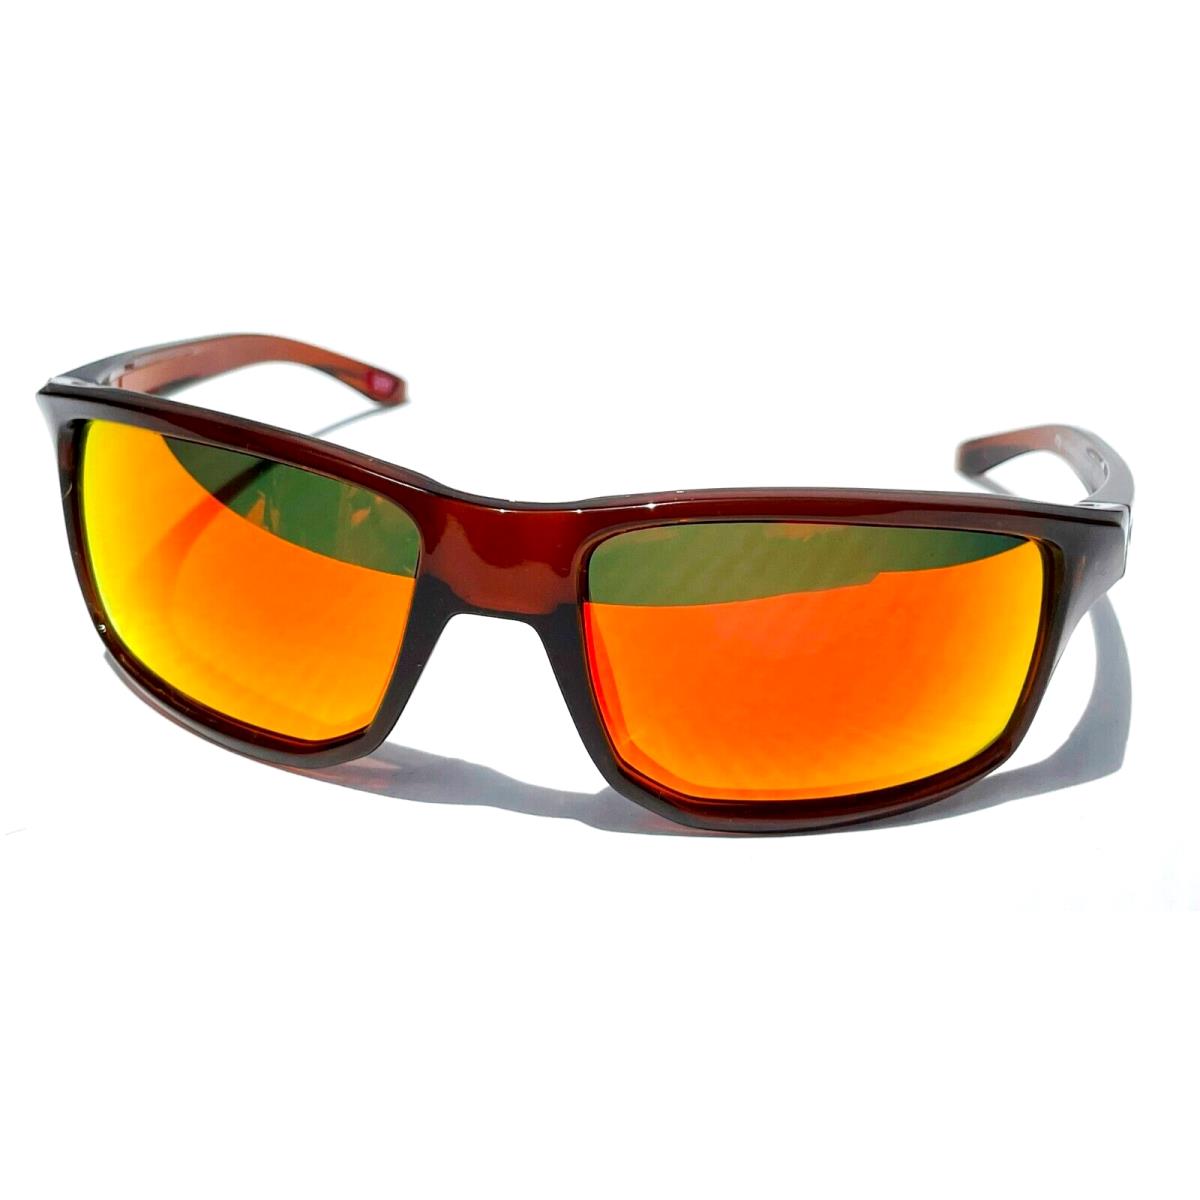 Oakley sunglasses Gibston - Brown Frame, Red Lens 1